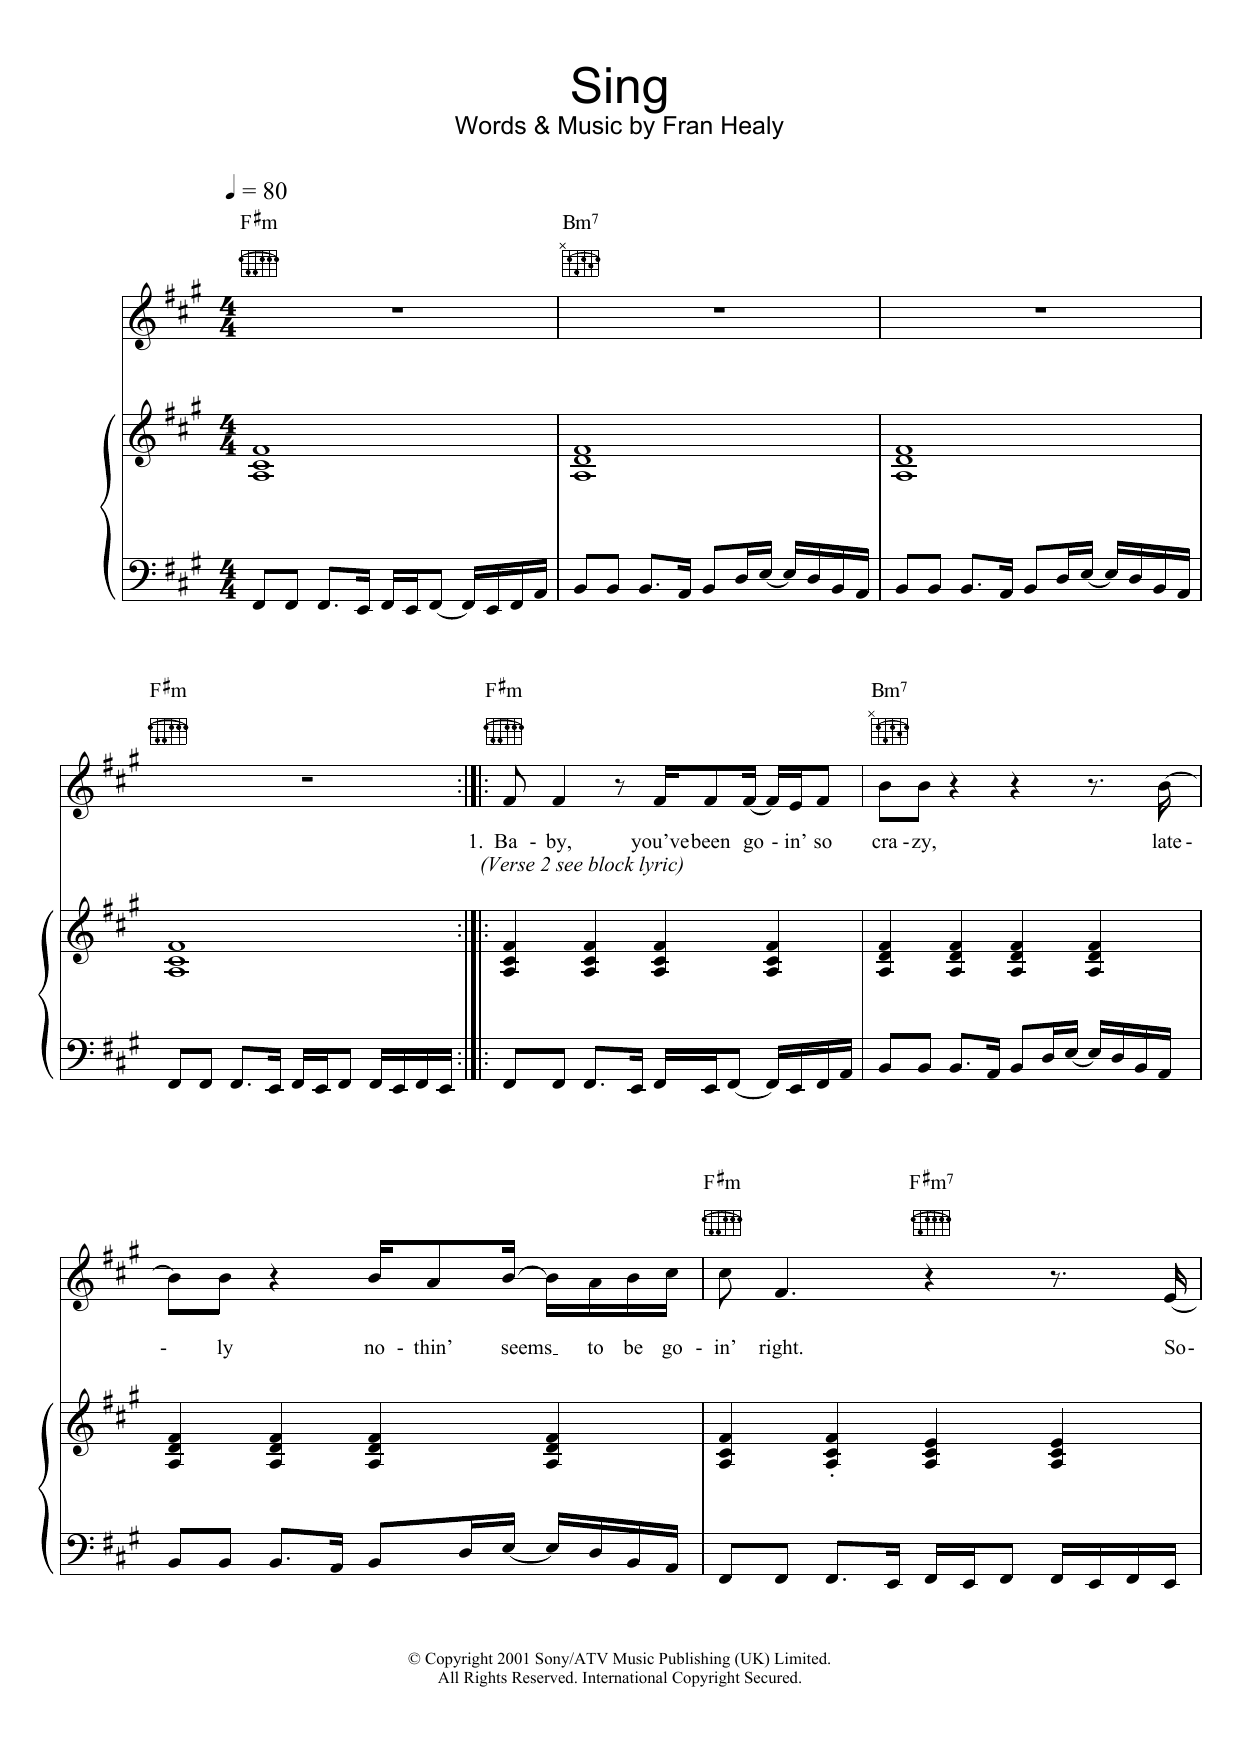 Travis Sing Sheet Music Notes & Chords for Violin - Download or Print PDF